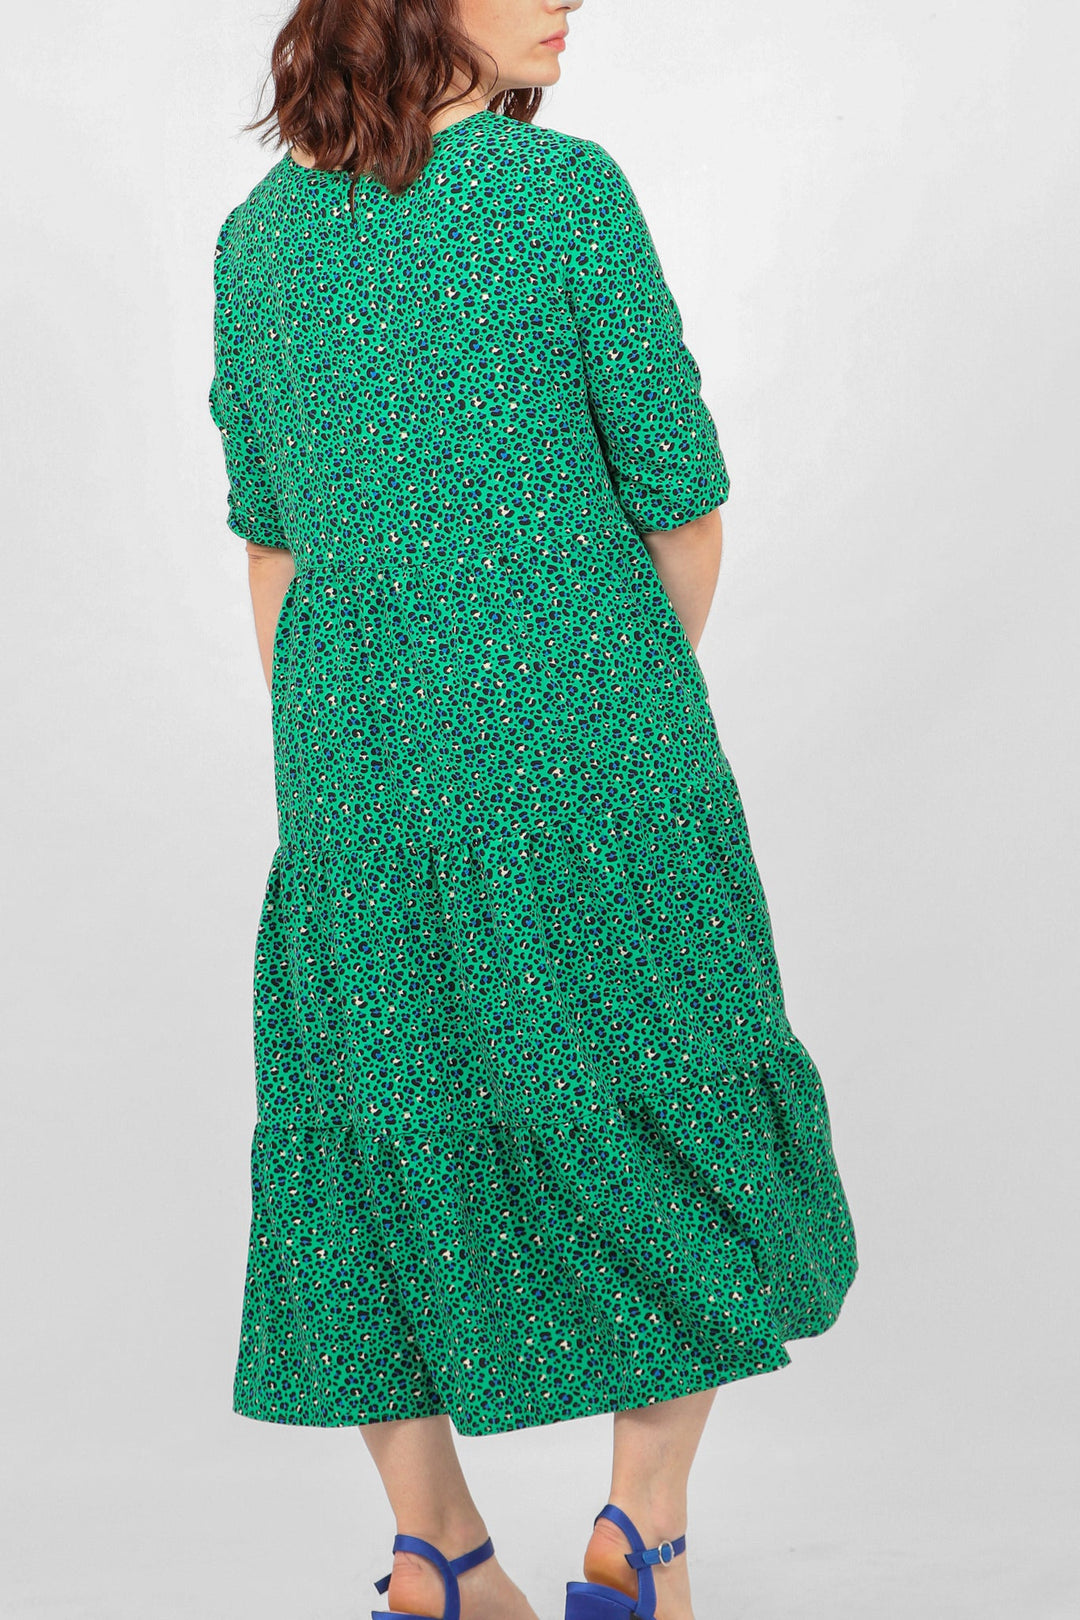 Green Small Animal Print Tiered Dress